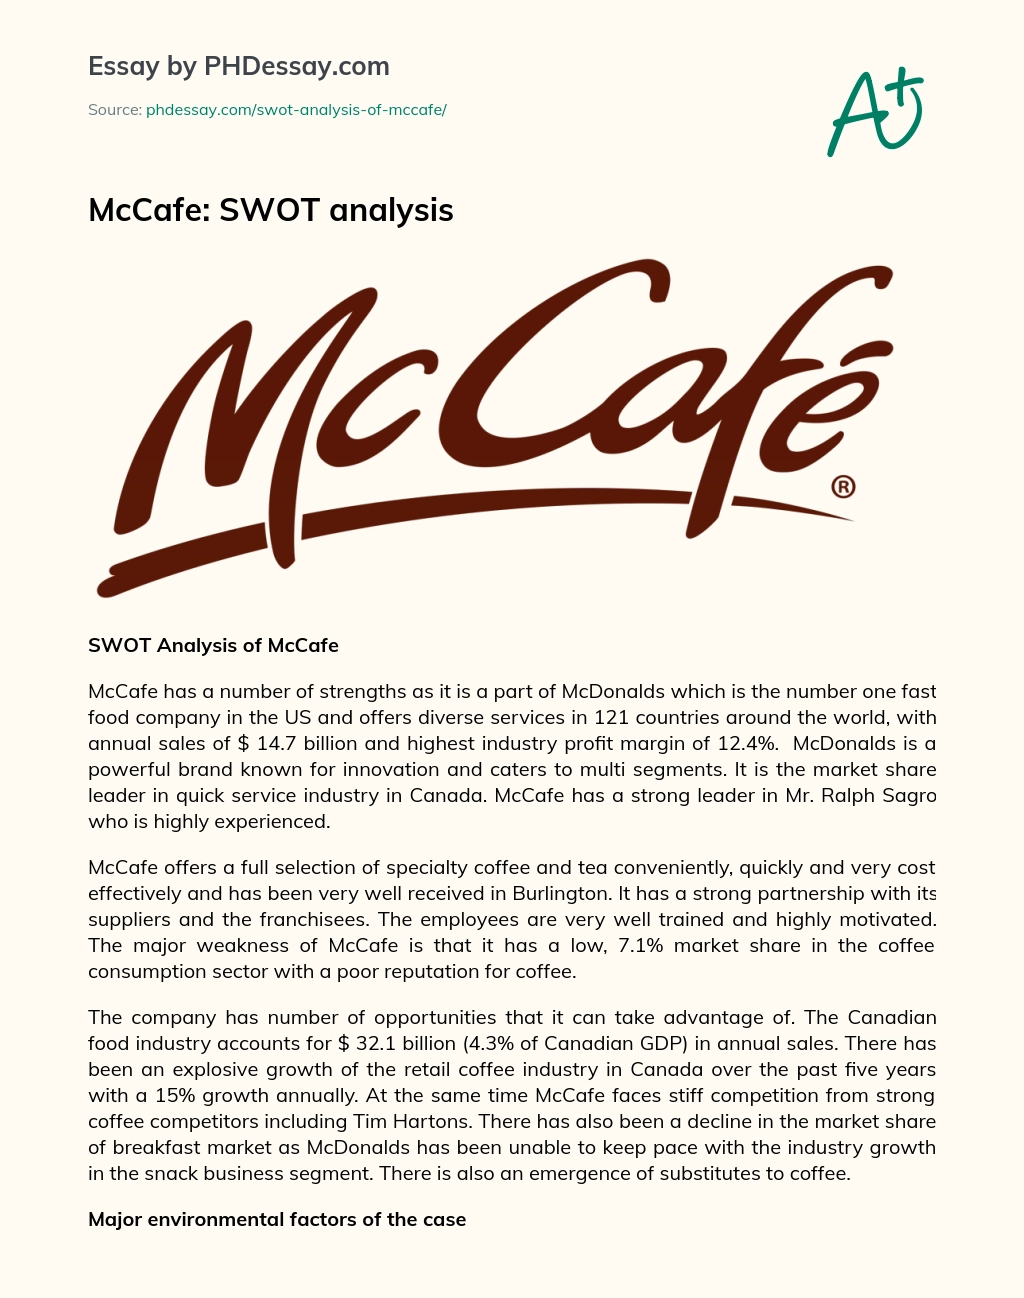 McCafe: SWOT analysis essay